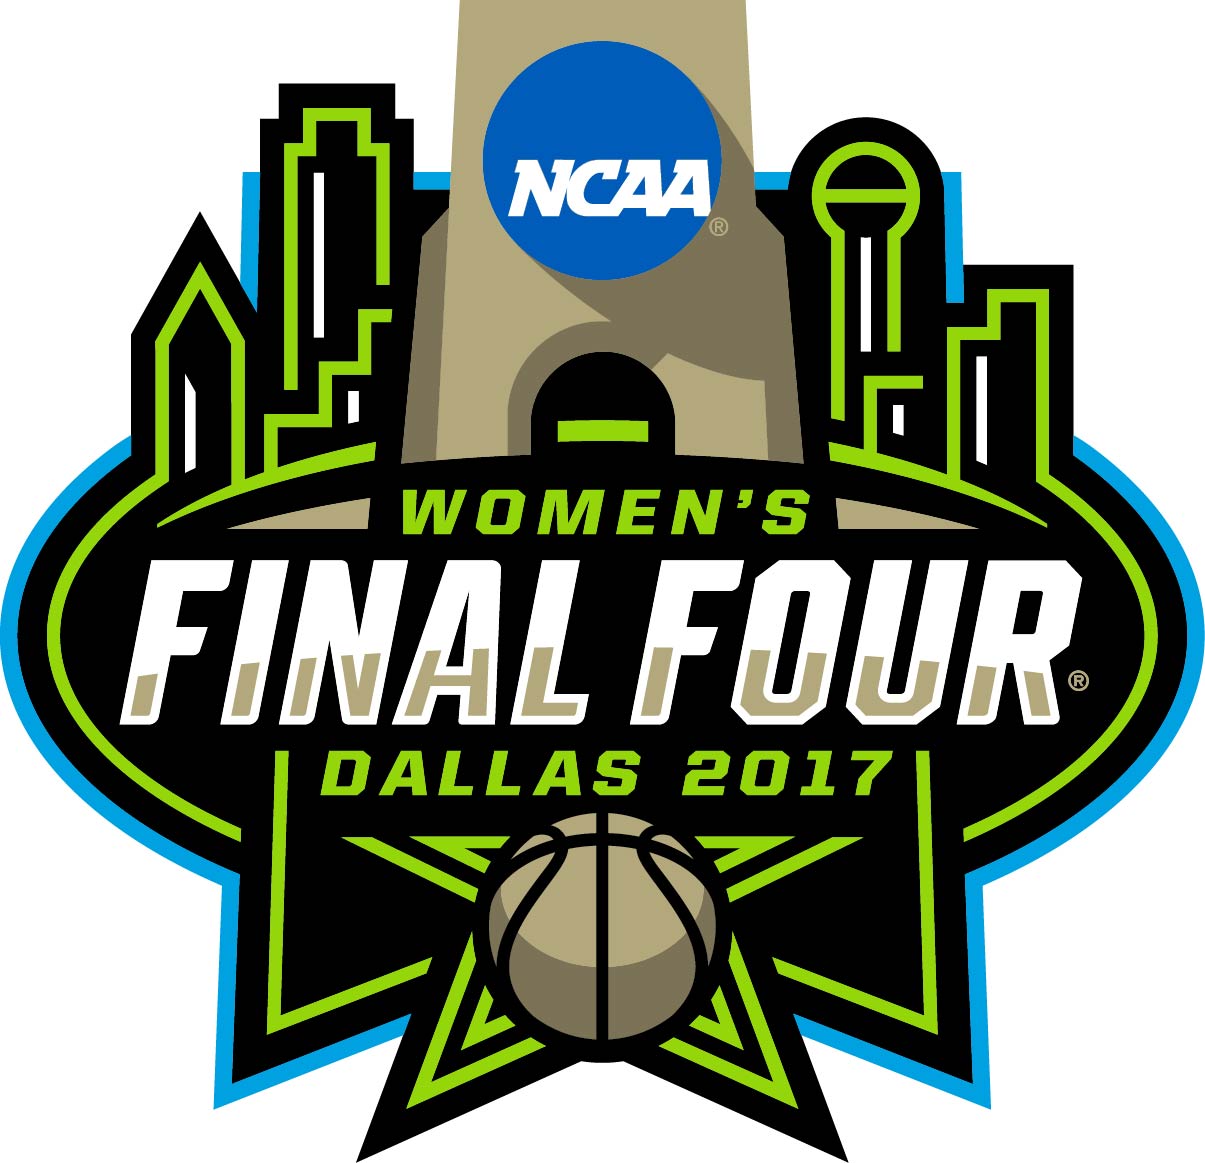 2017 NCAA Women’s Final Four logo was unveiled 